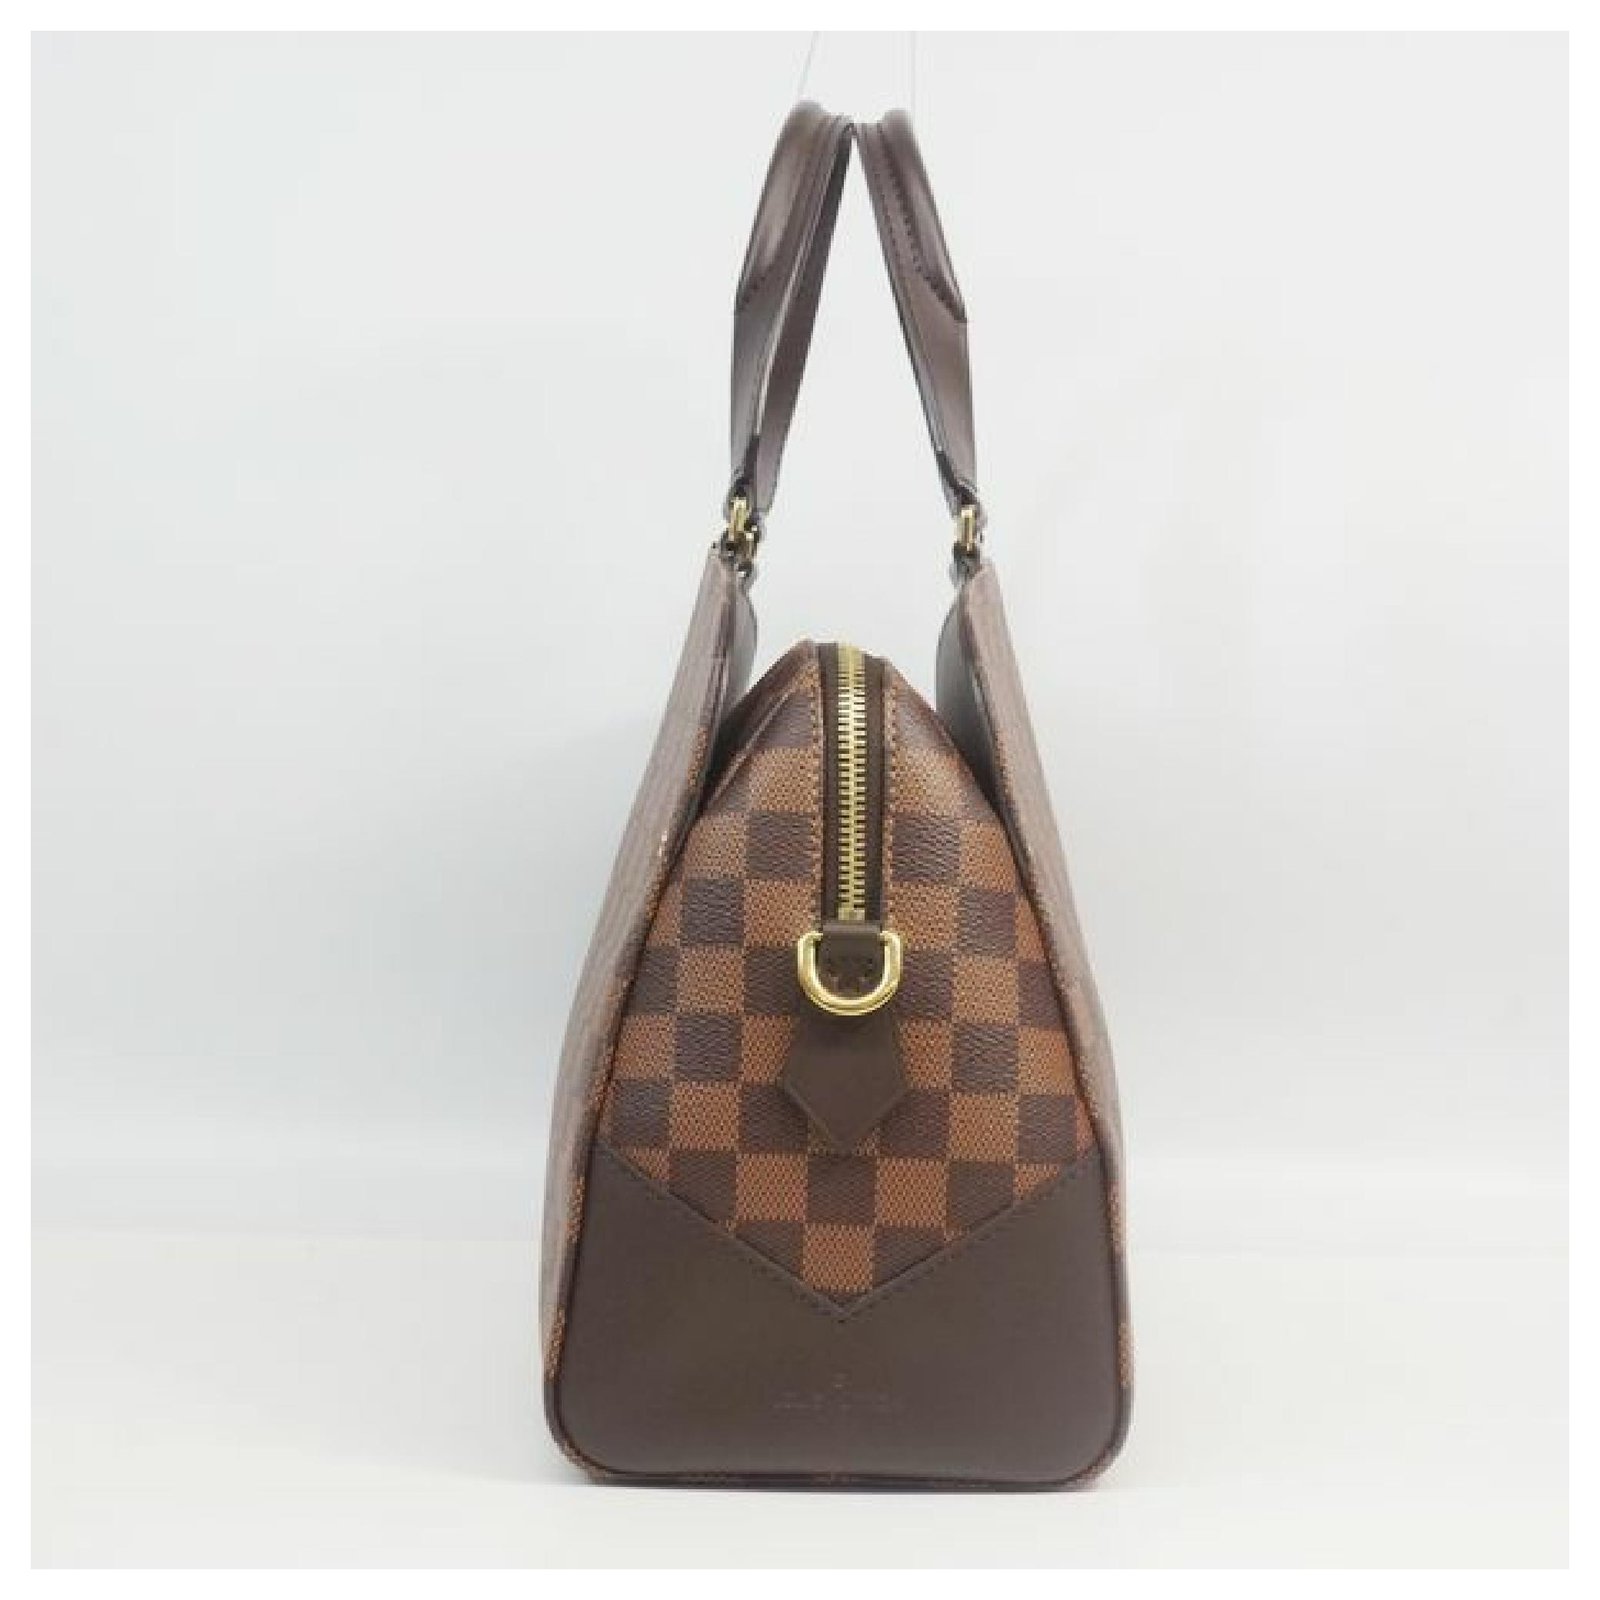 Louis Vuitton Damier Kensington bowling bag n41505 for Sale in